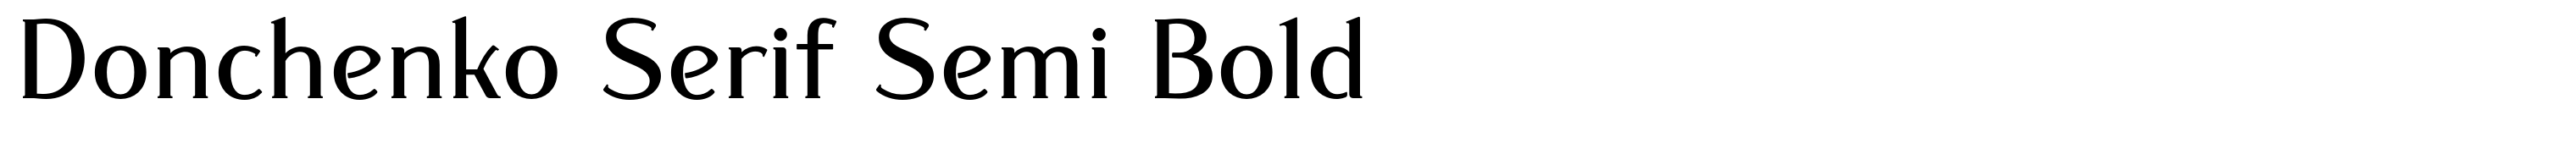 Donchenko Serif Semi Bold